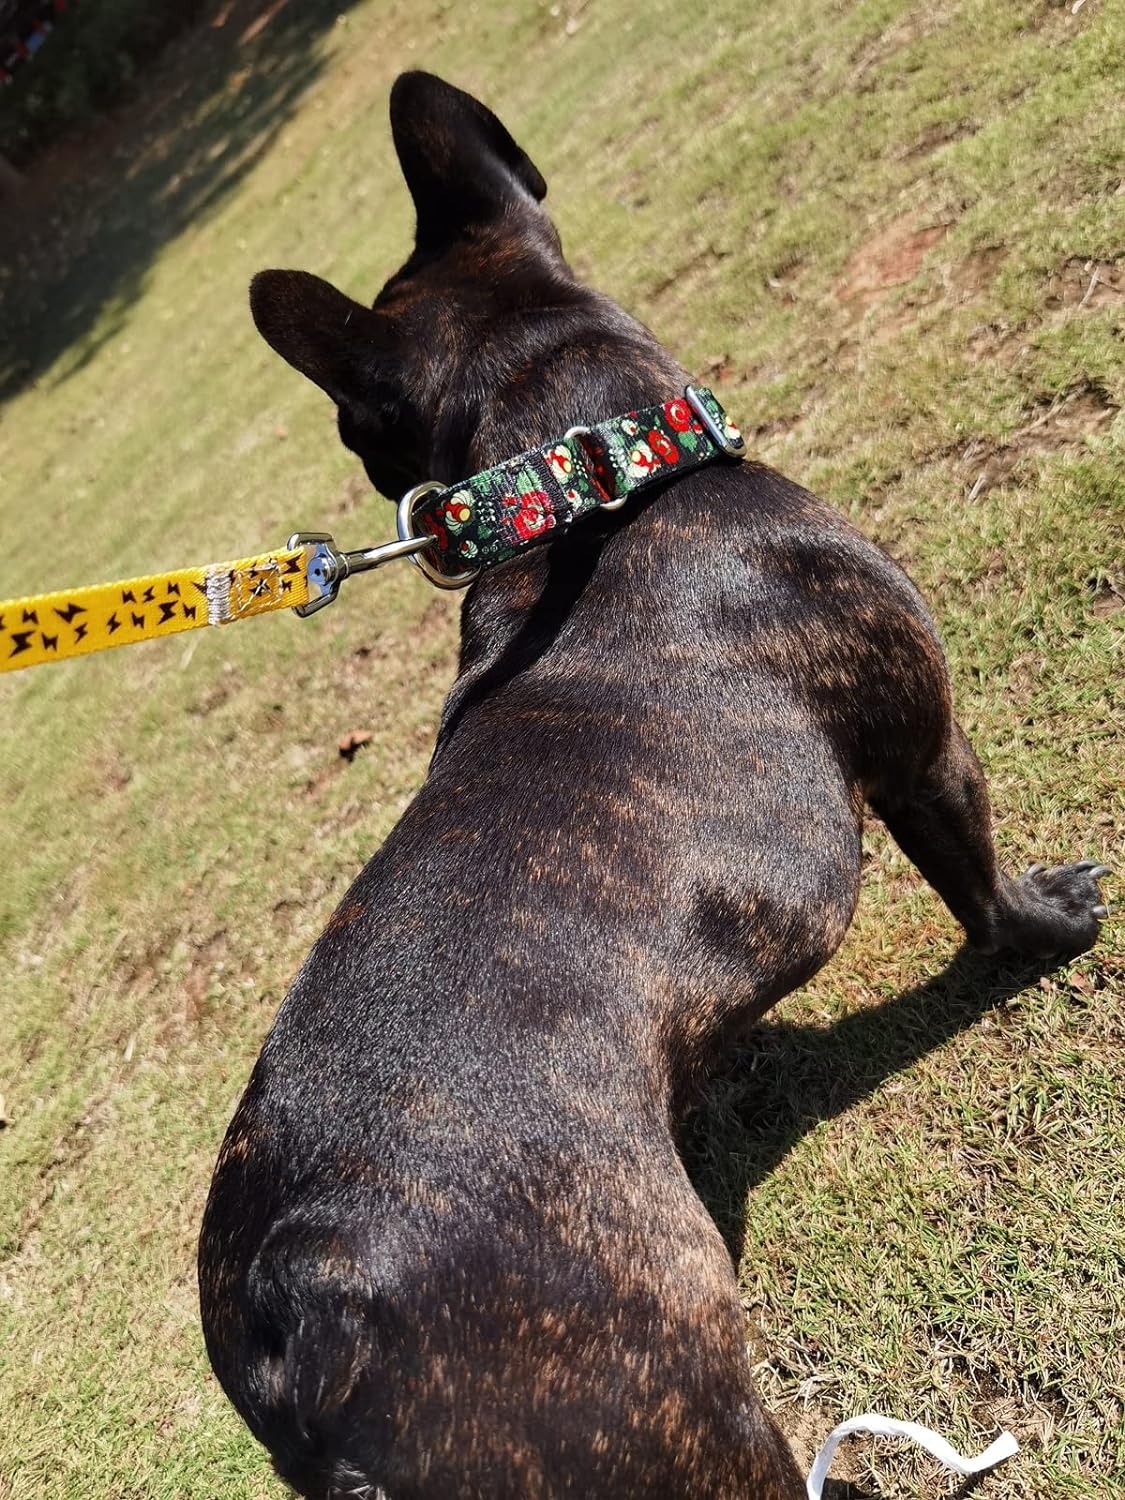 Heavy Duty Nylon Dog Collar, Adjustable Martingale Dog Collar for Walking Training Boy and Girl Dogs Medium Large Dogs (M:36-45CM, Green)